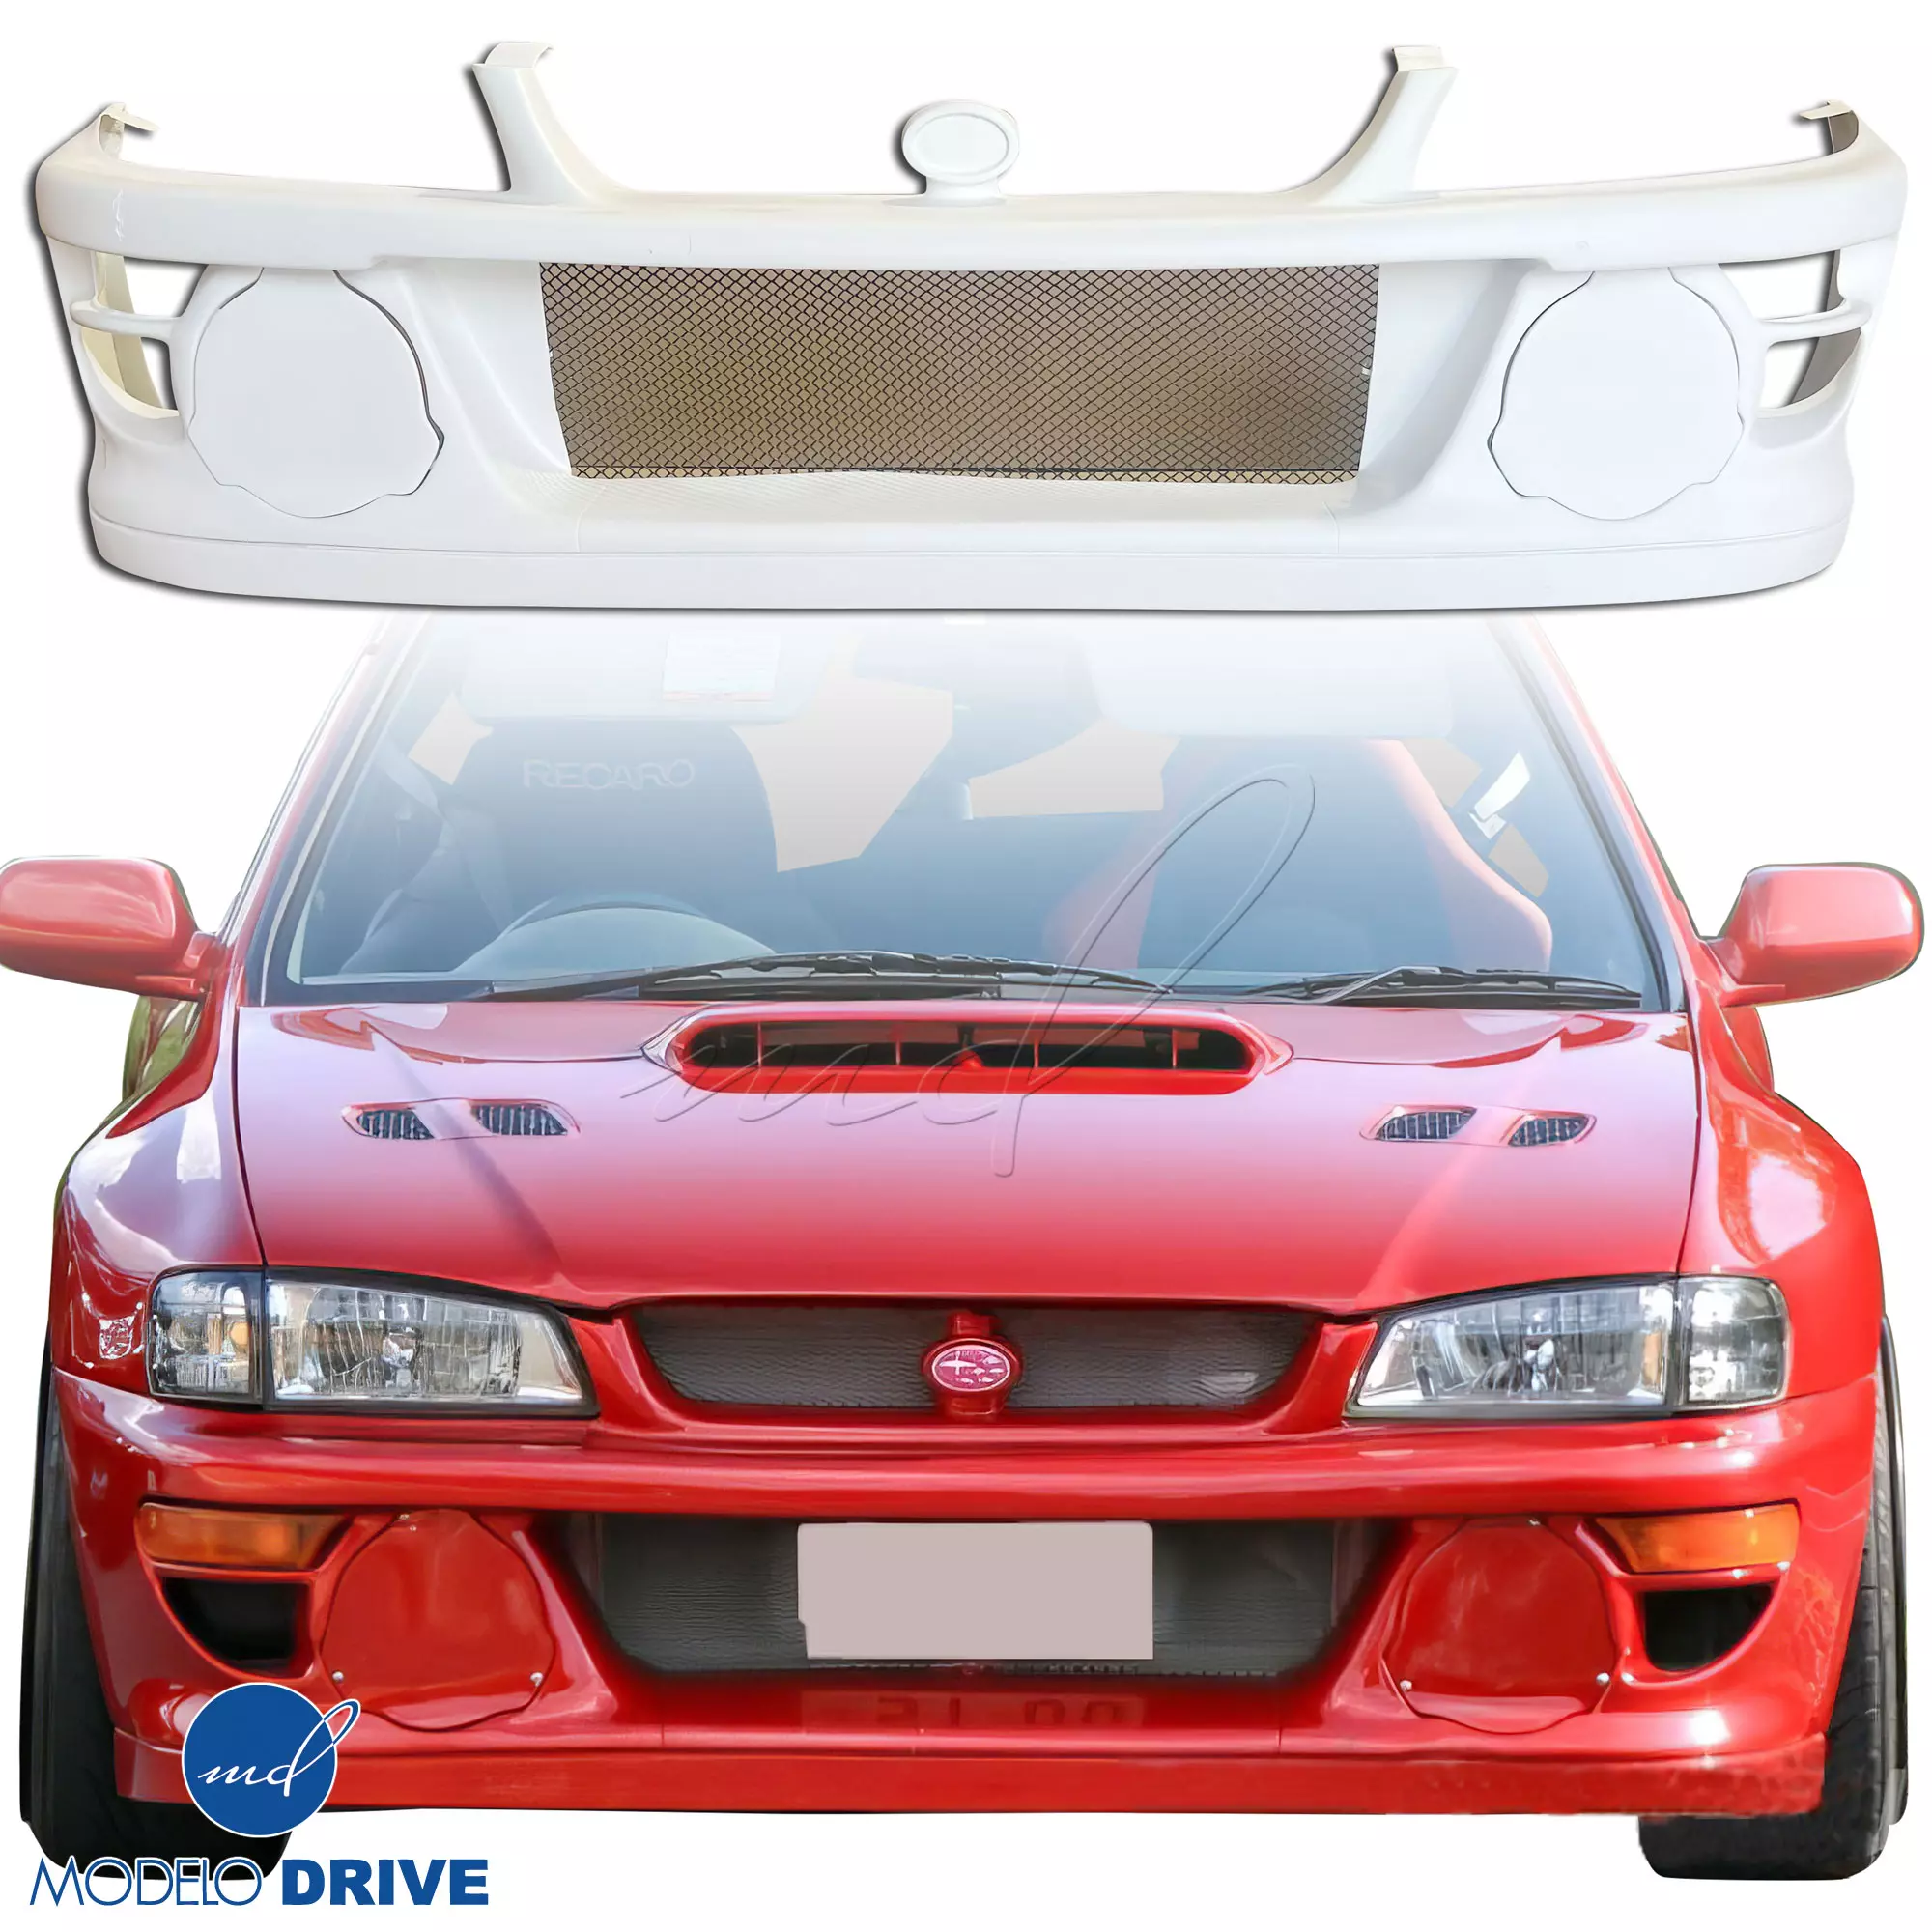 ModeloDrive FRP LS WRC 98 Wide Body Kit 11pc > Subaru Impreza (GC8) 1993-2001 > 2dr Coupe - Image 13